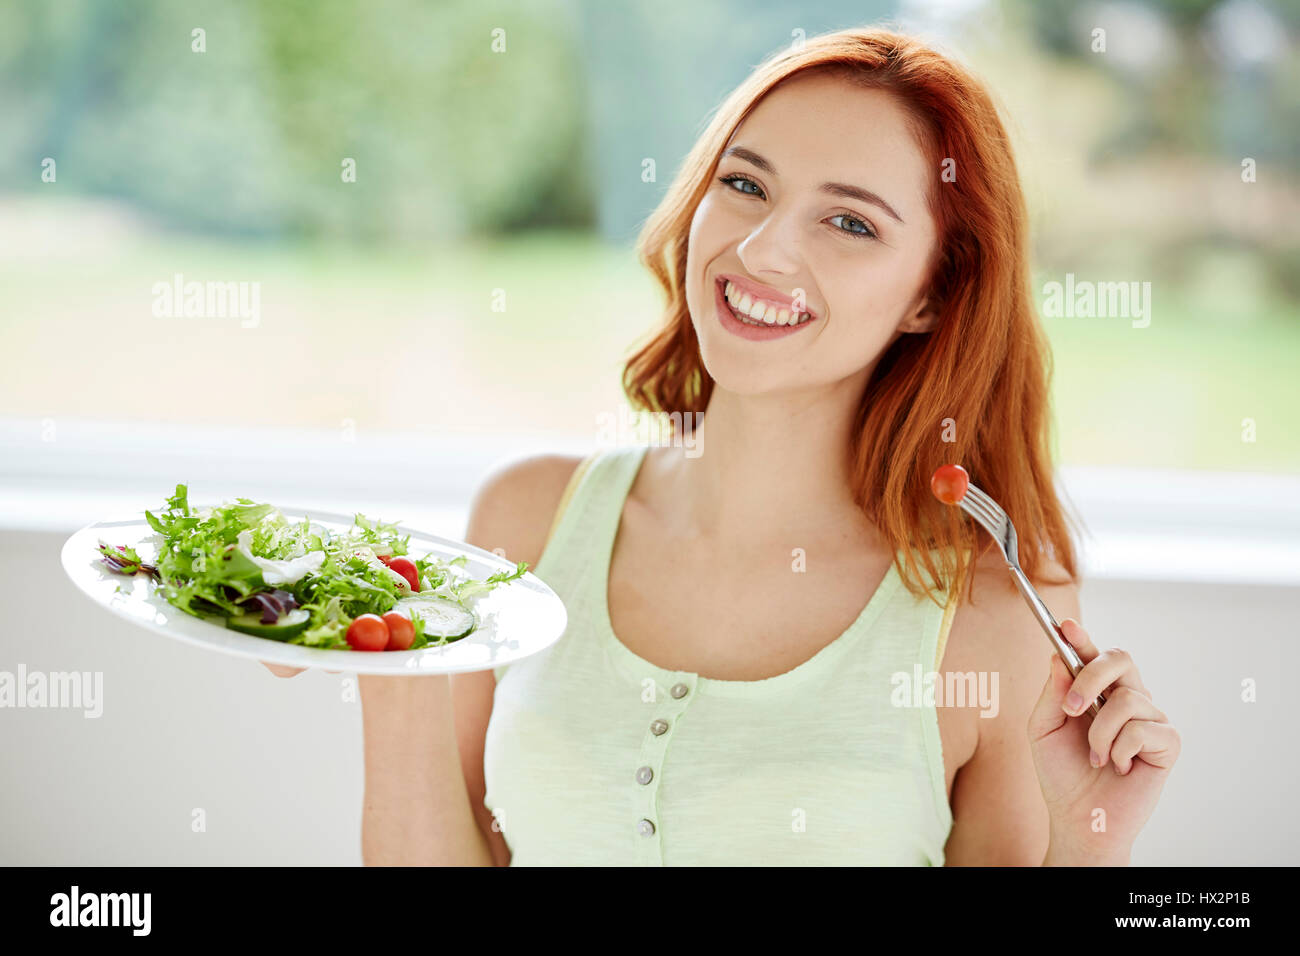 Girl eating healthy salad Stock Photo